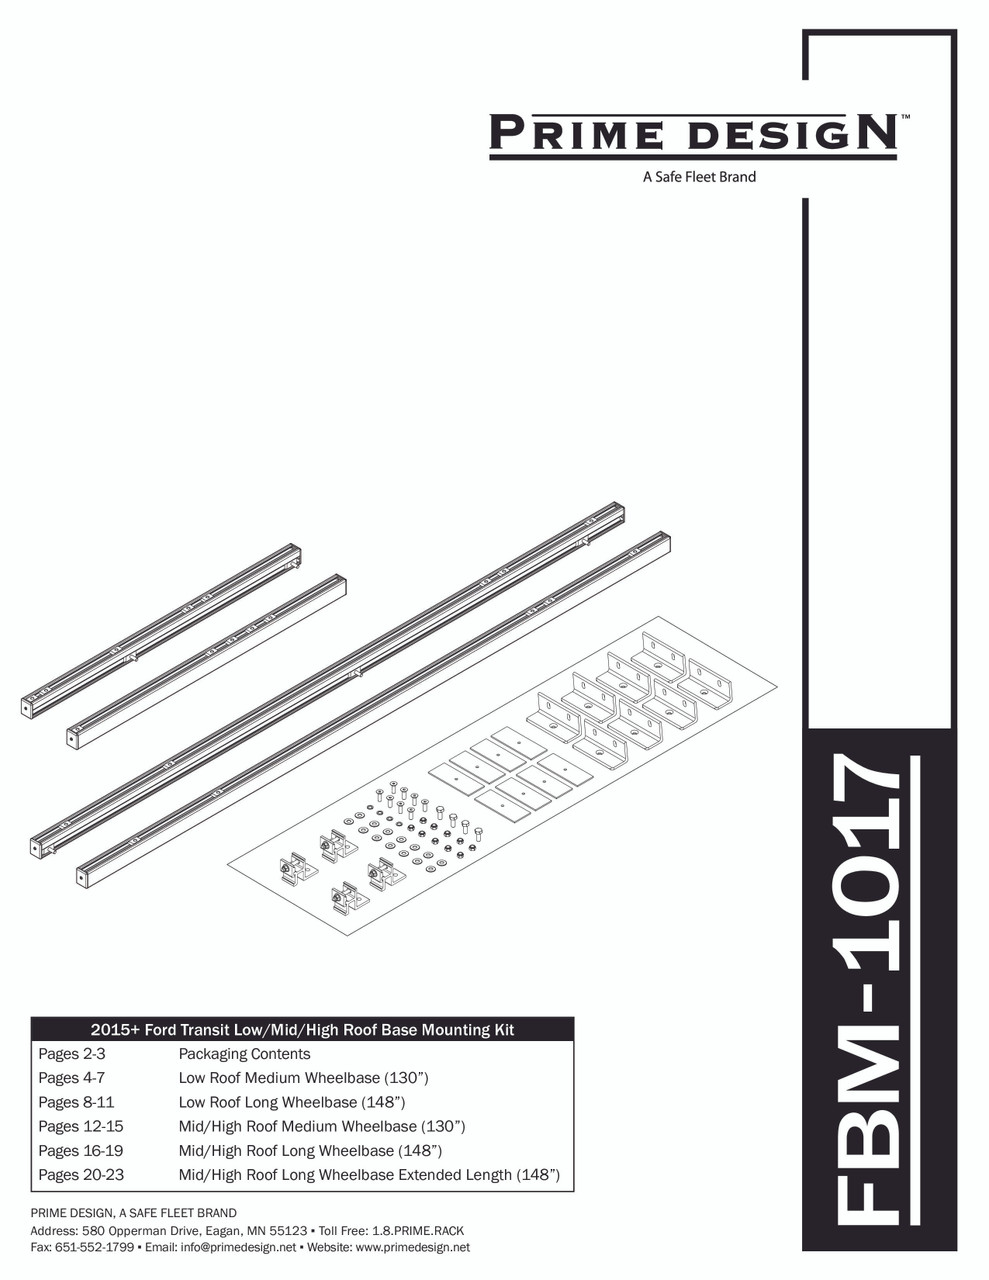 LadderProducts.com | Prime Design FBM-1017 Ford Transit Roof Mounting Kit